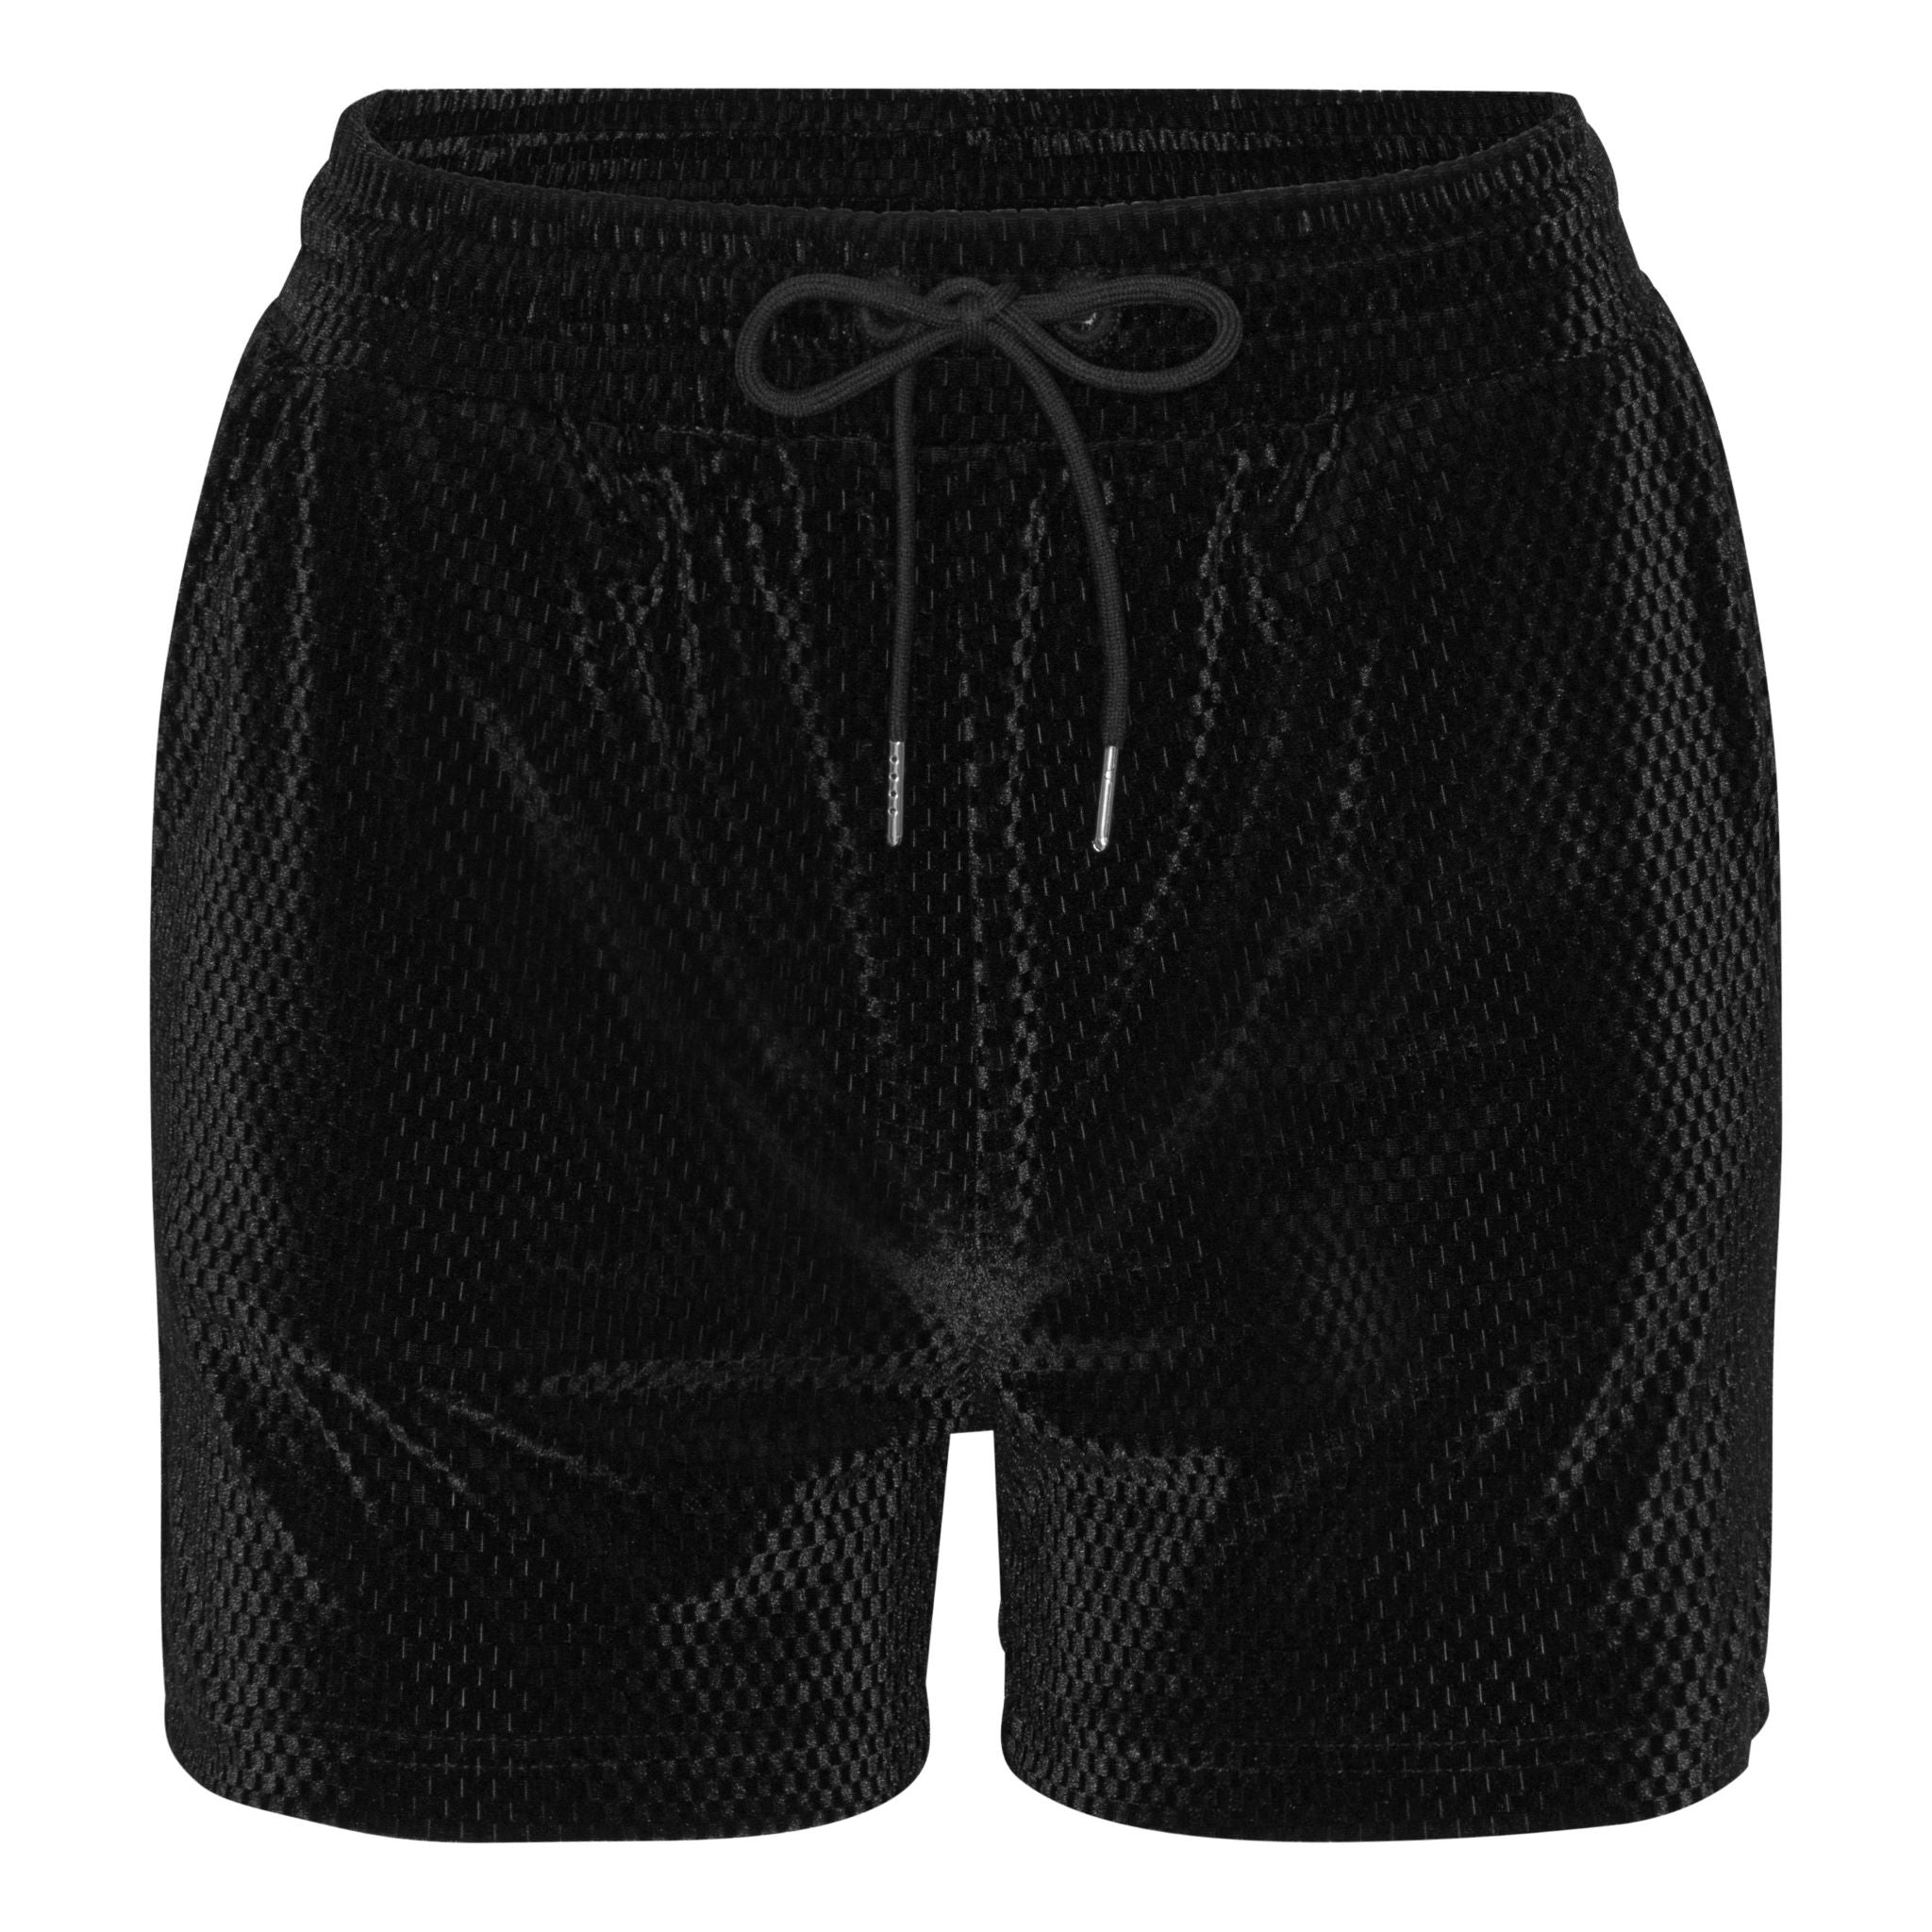 Velor patterned Shorts